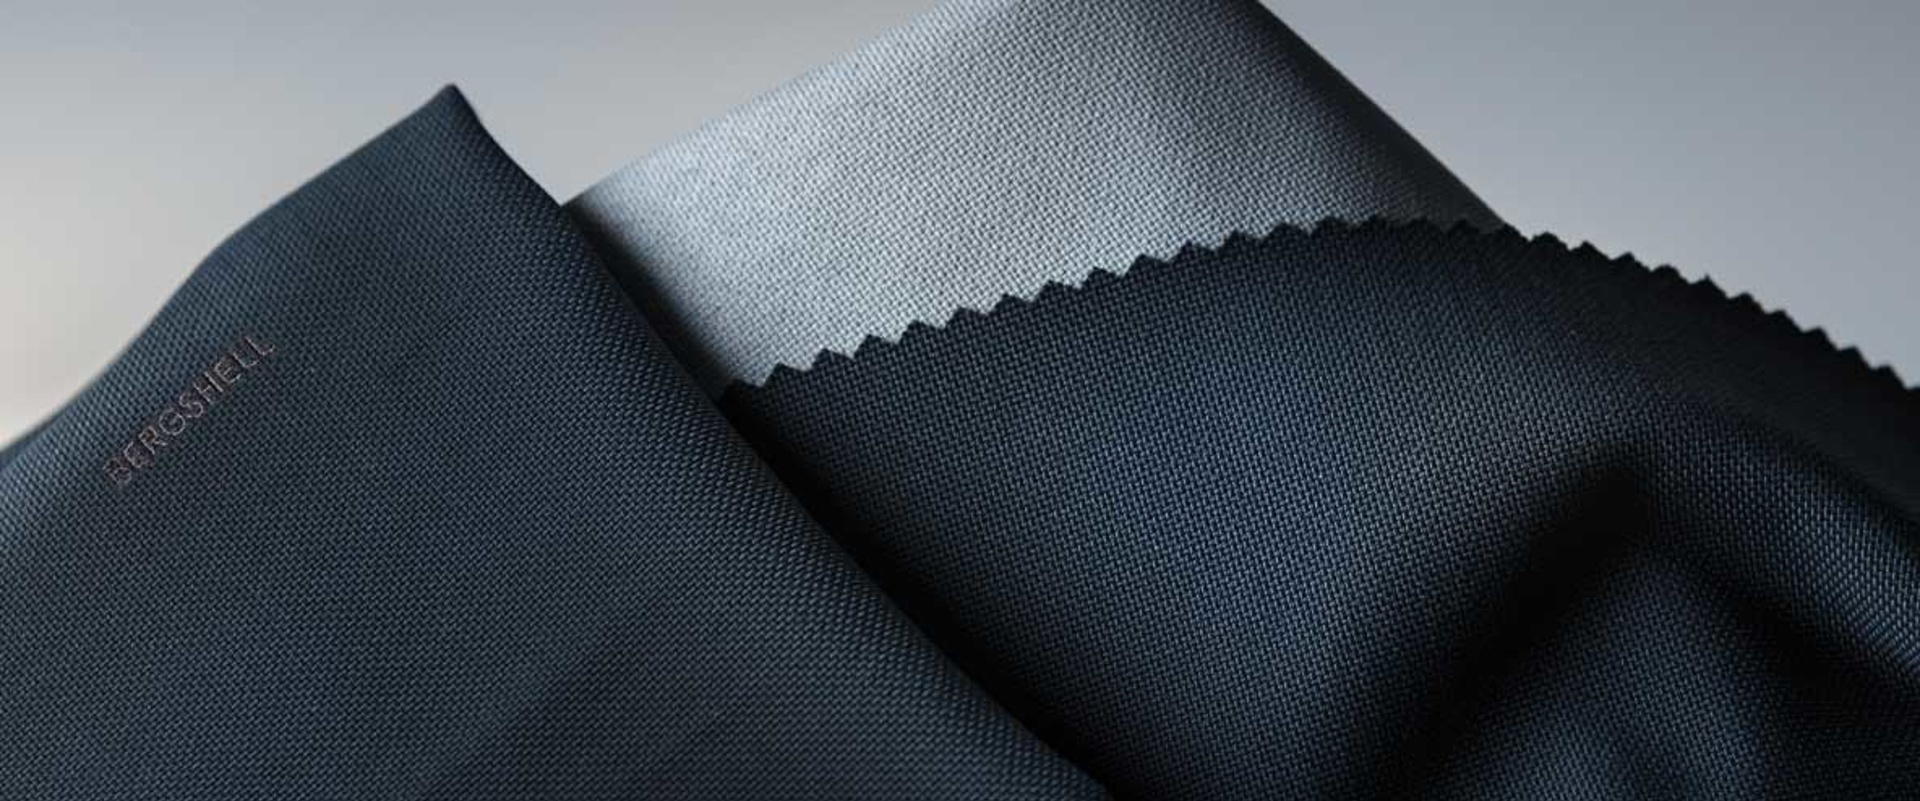 Bergshell fabric swatches